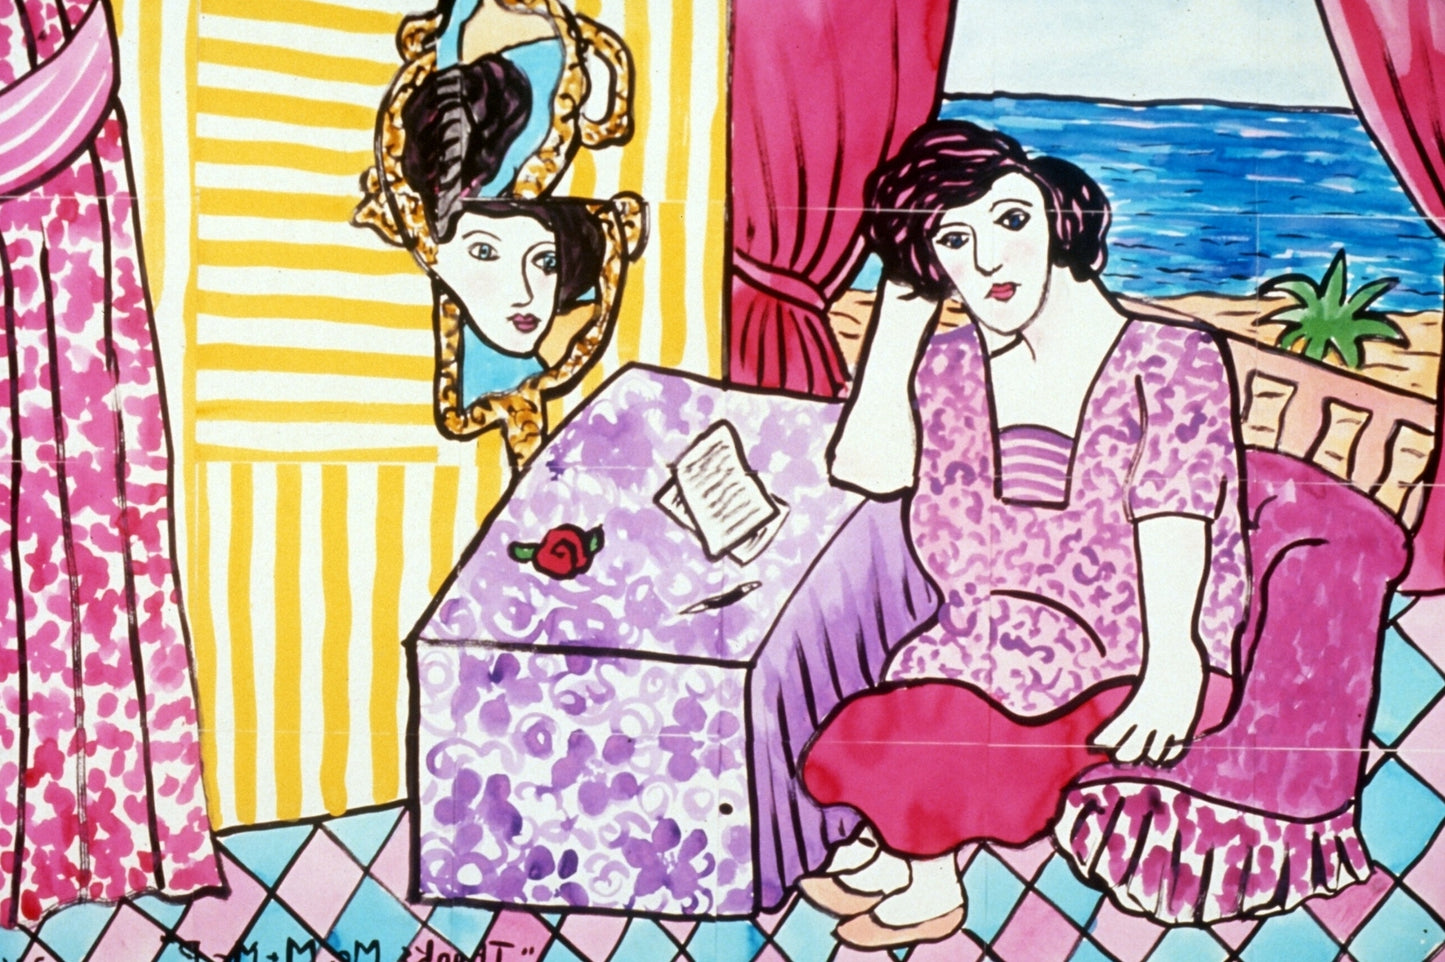 Paper Collage: Matisse Cut-Up 1